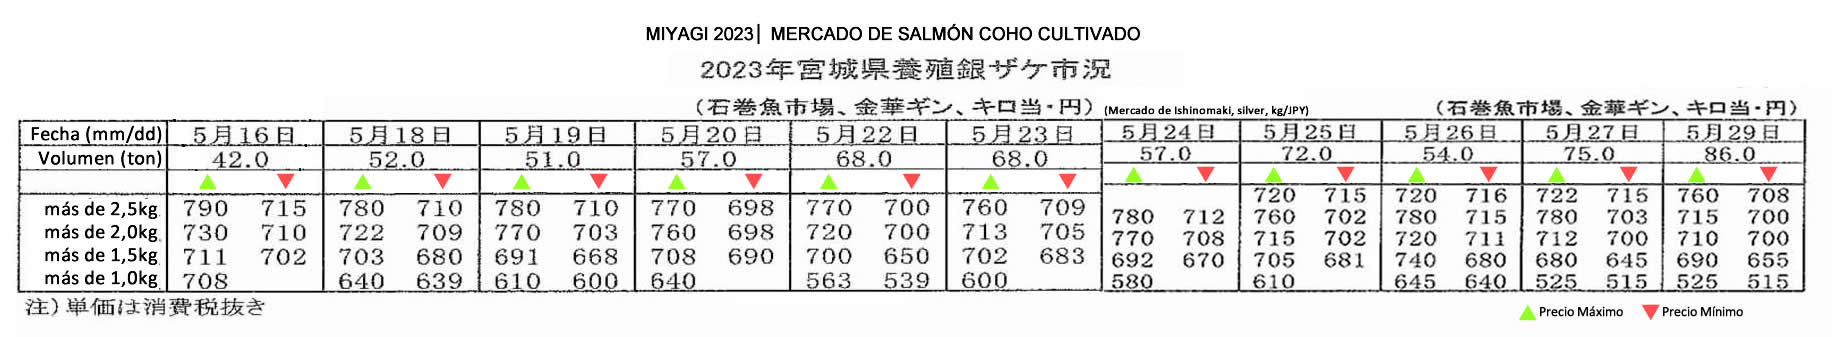 Miyagi-Mercado de silver salmon cultivado FIS seafood_media.jpg